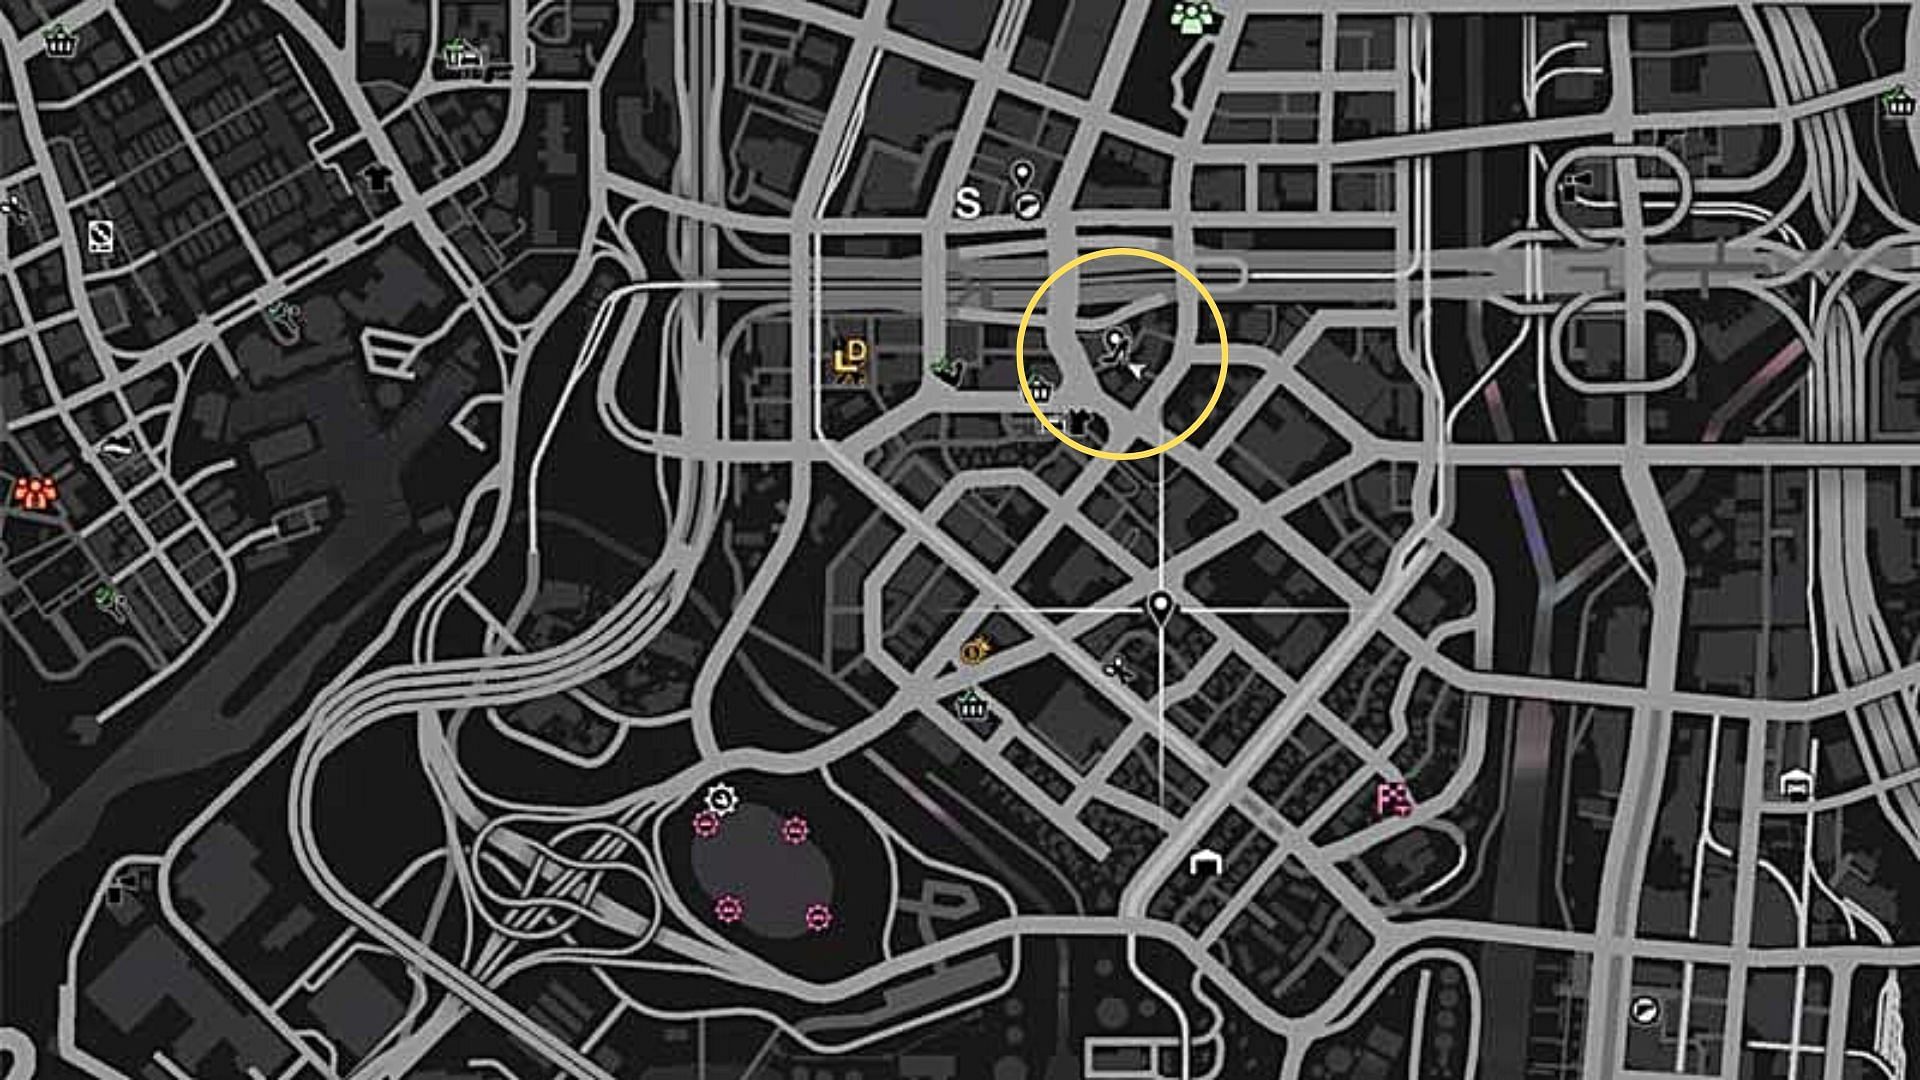 Map location of Unicorn Vanilla Club in the game (Image via Rockstar Games)